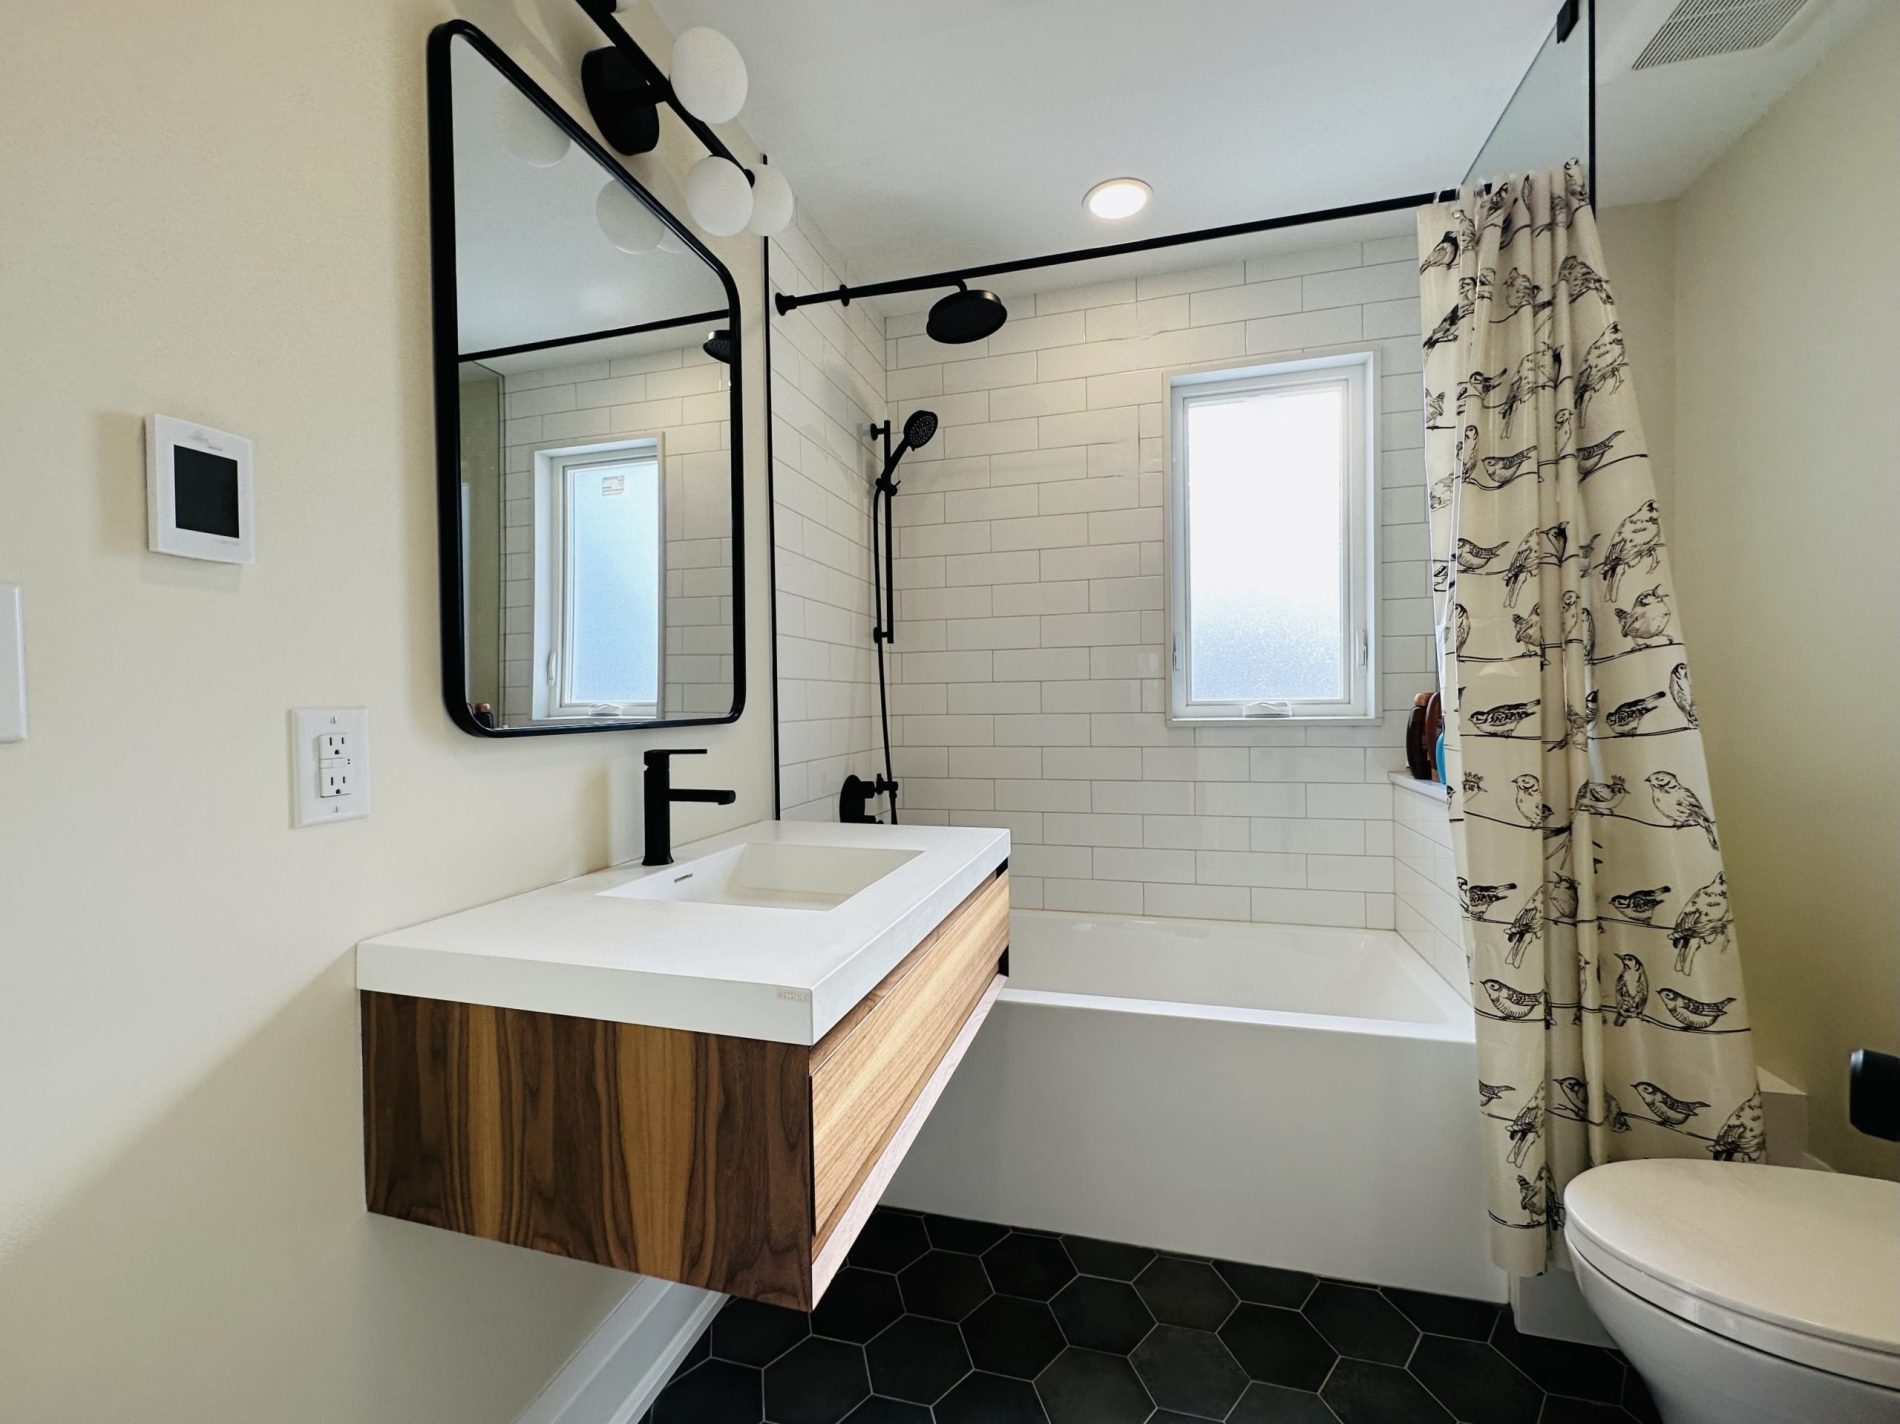 Westwood – Toronto Modern Bathroom Renovation - Featured Image